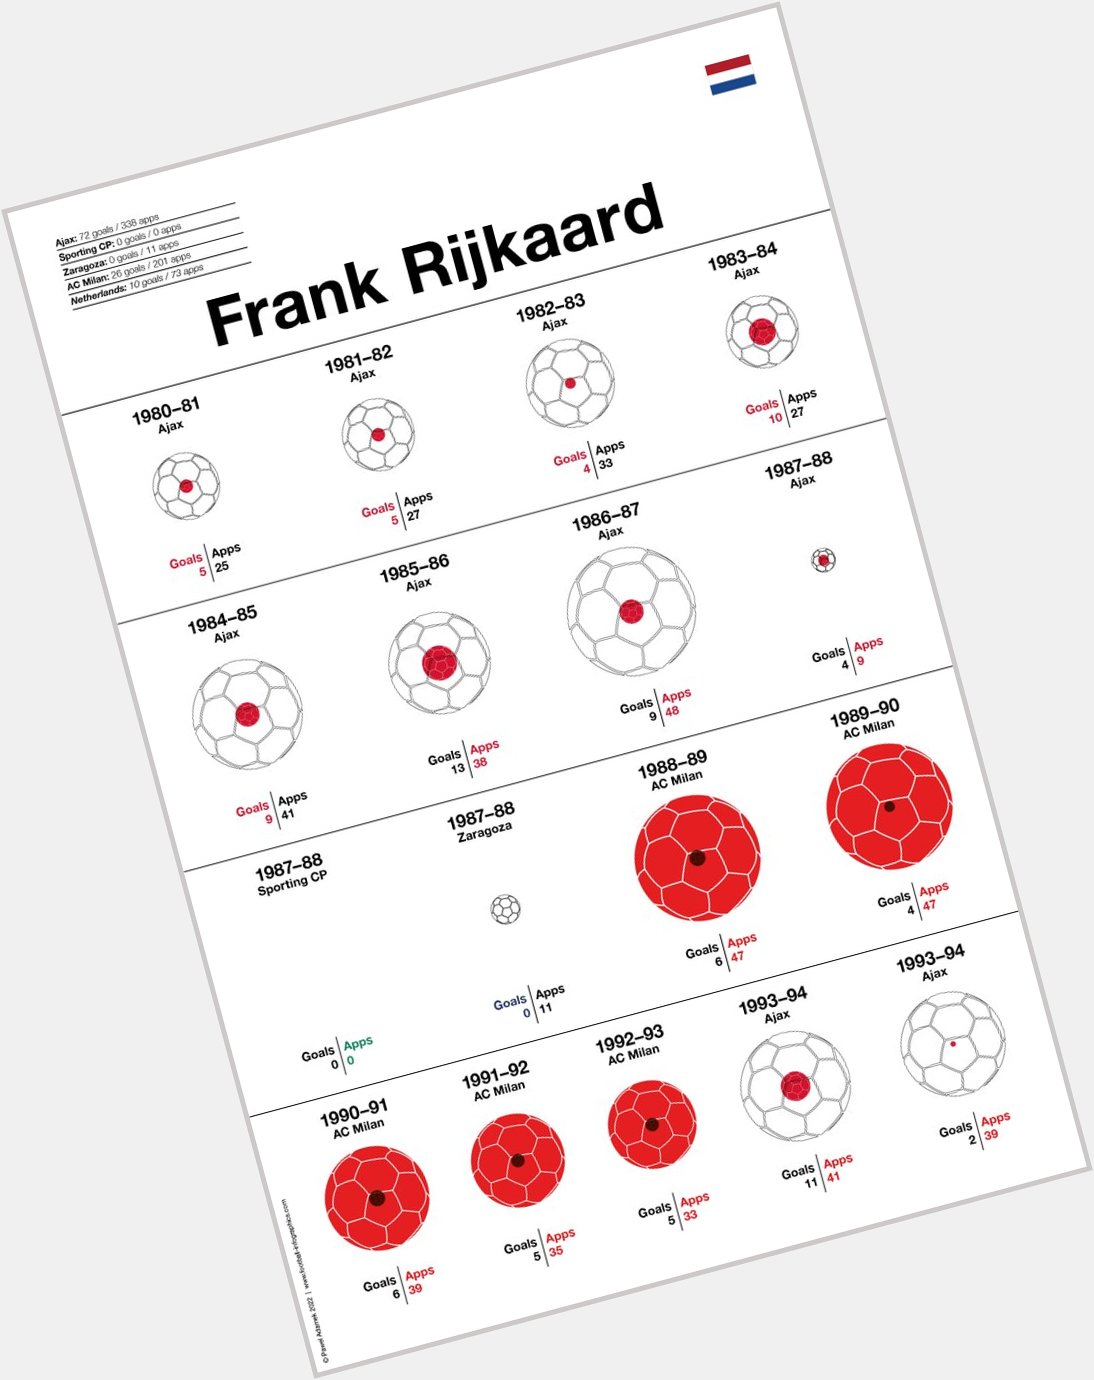 Happy Birthday to Frank Rijkaard!         